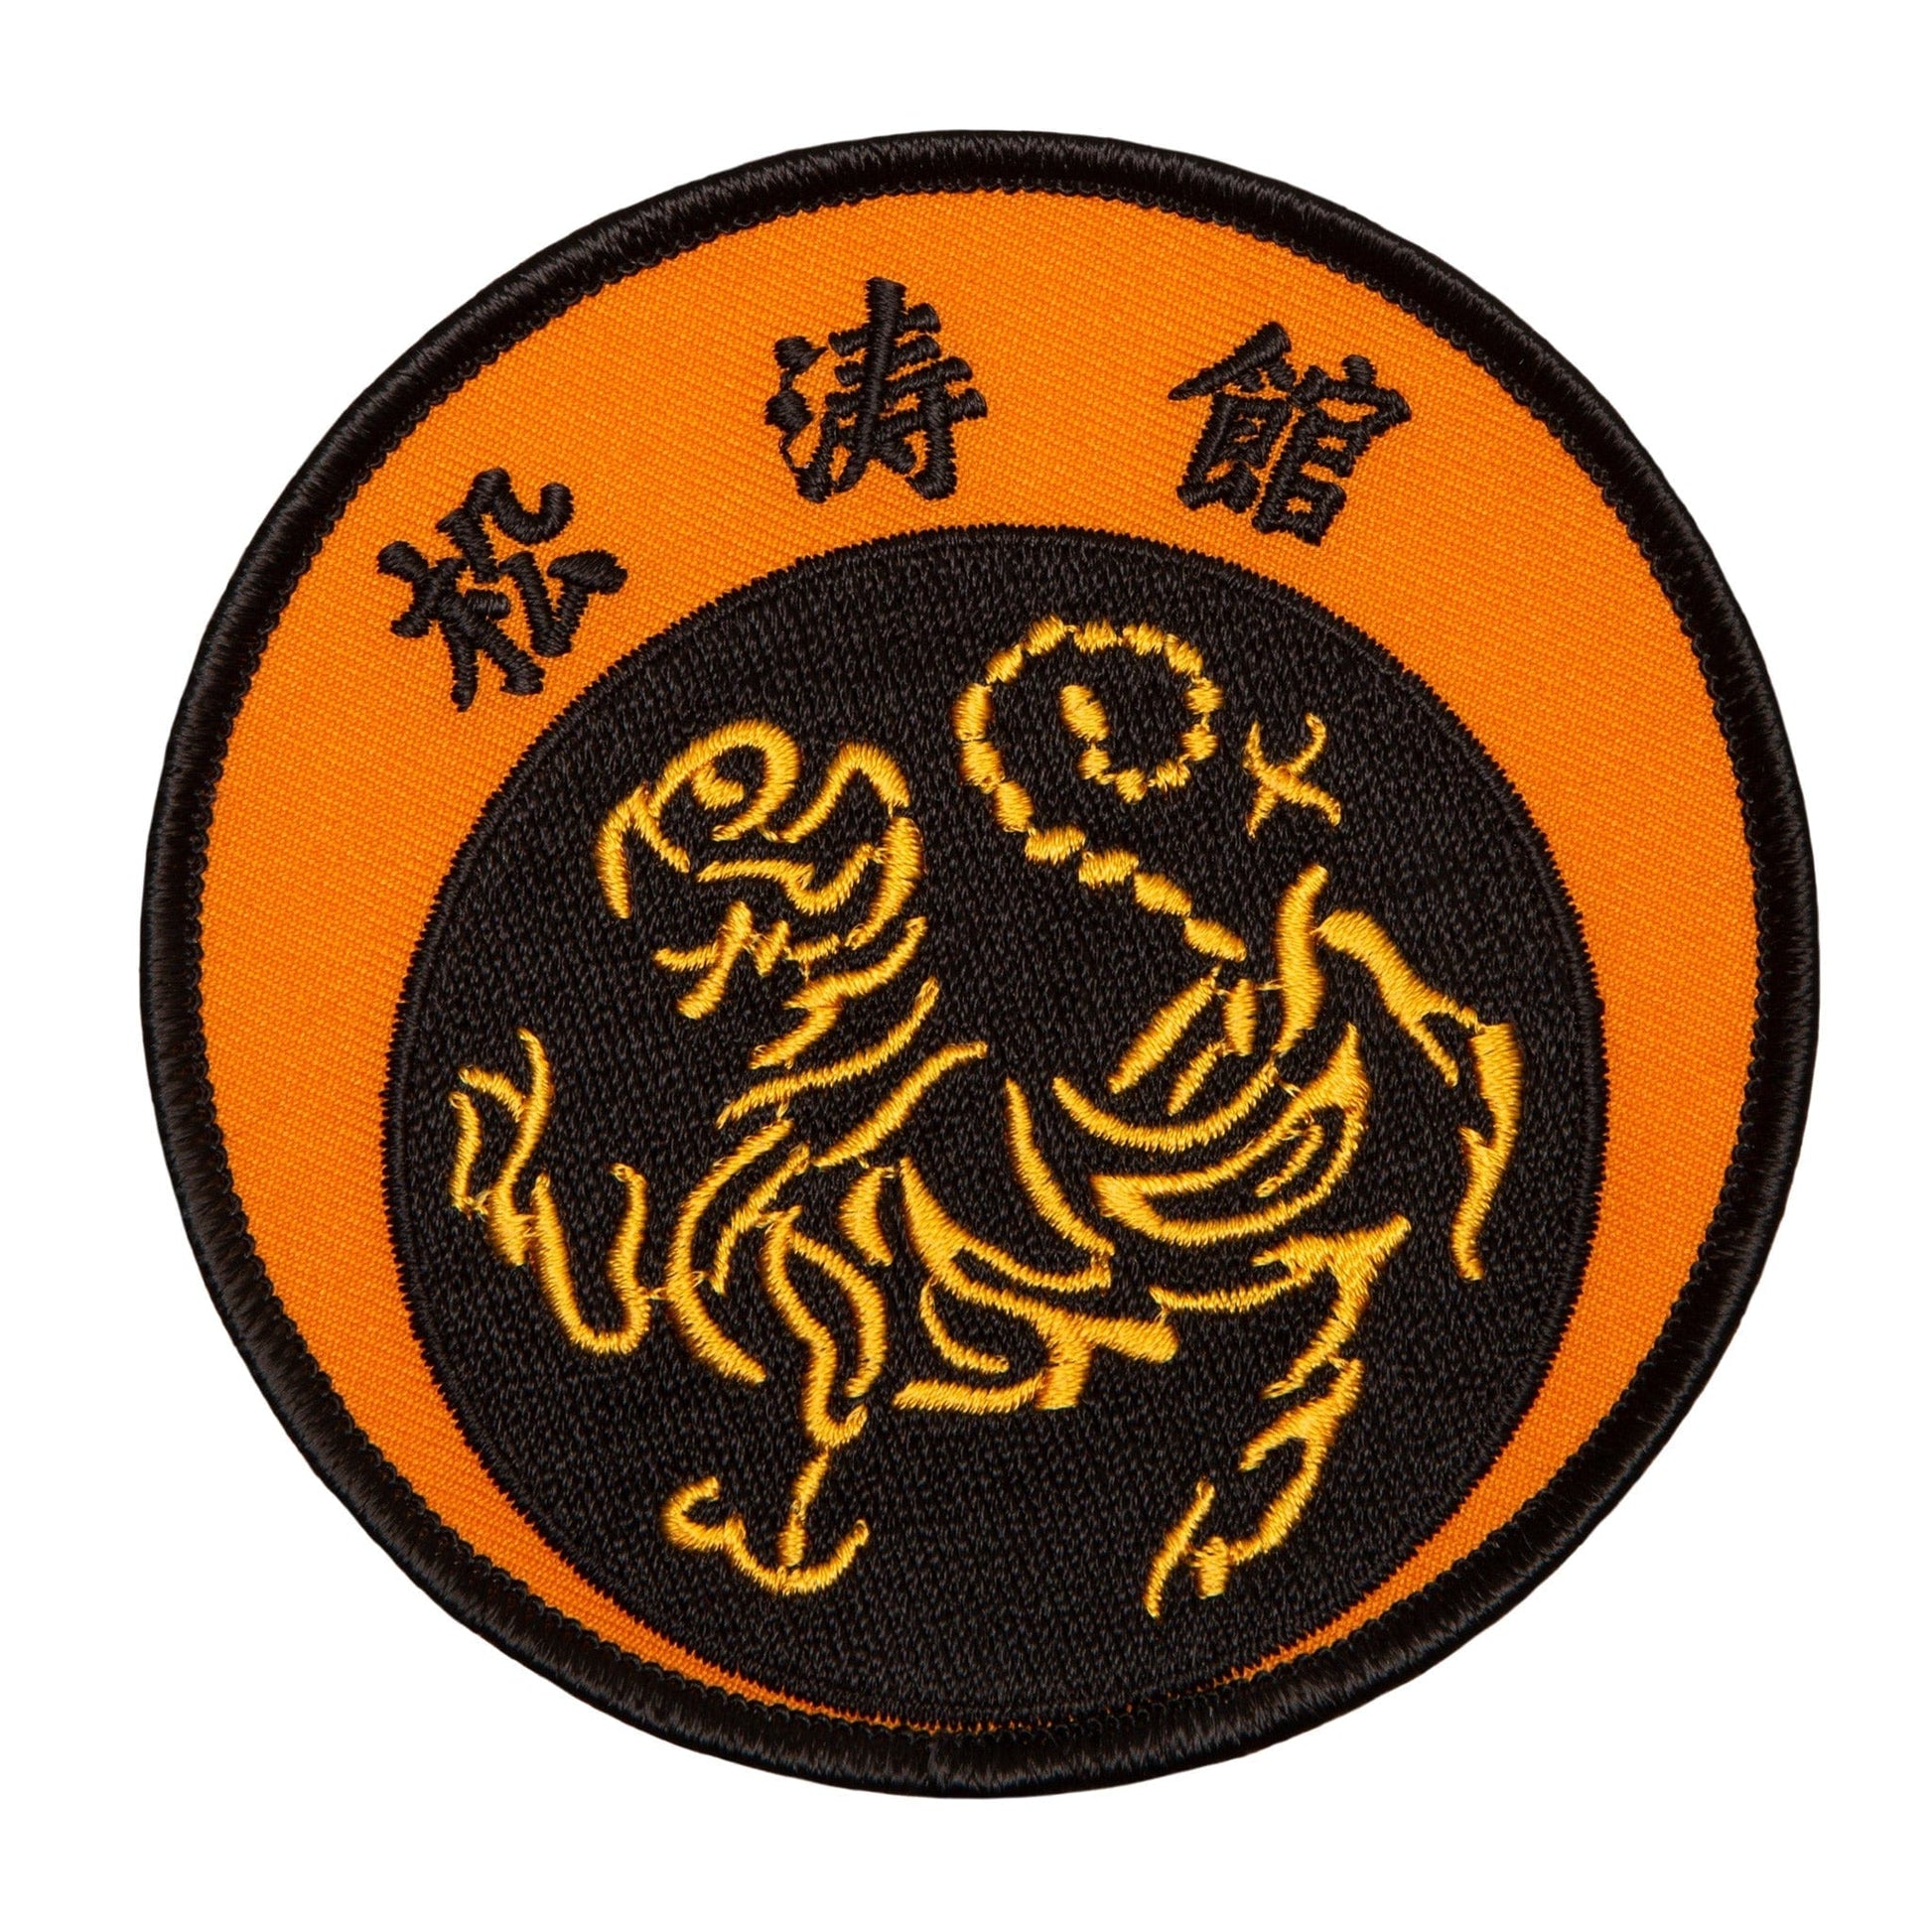 EclipseMartialArtsSupplies sporting goods Shotokan Tiger Patch Martial Arts Uniform Patch